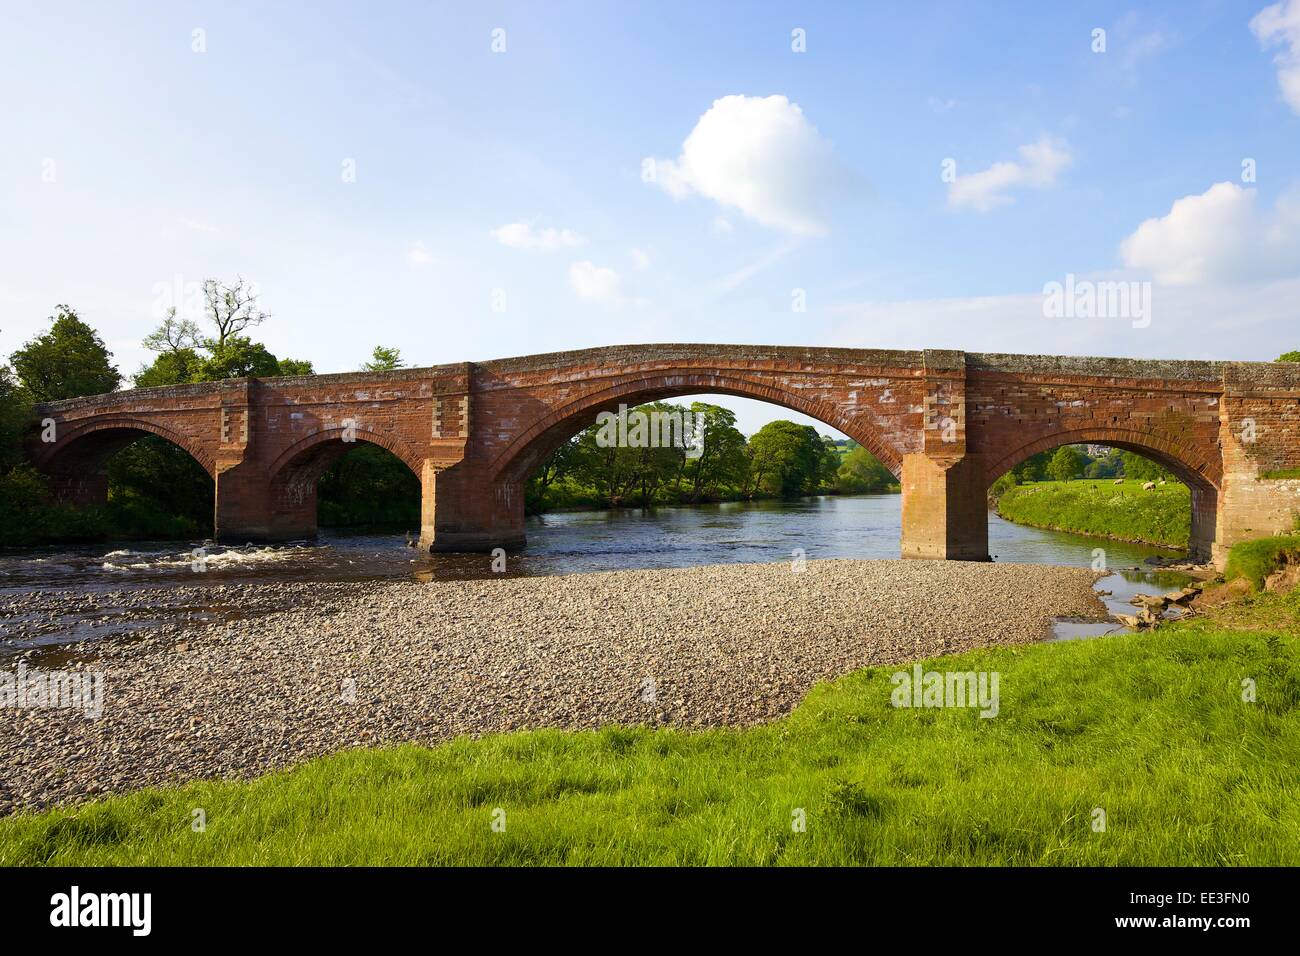 Arches of The Eden Bridge, Lazonby, Eden Valley, Cumbria, England, UK. Stock Photo